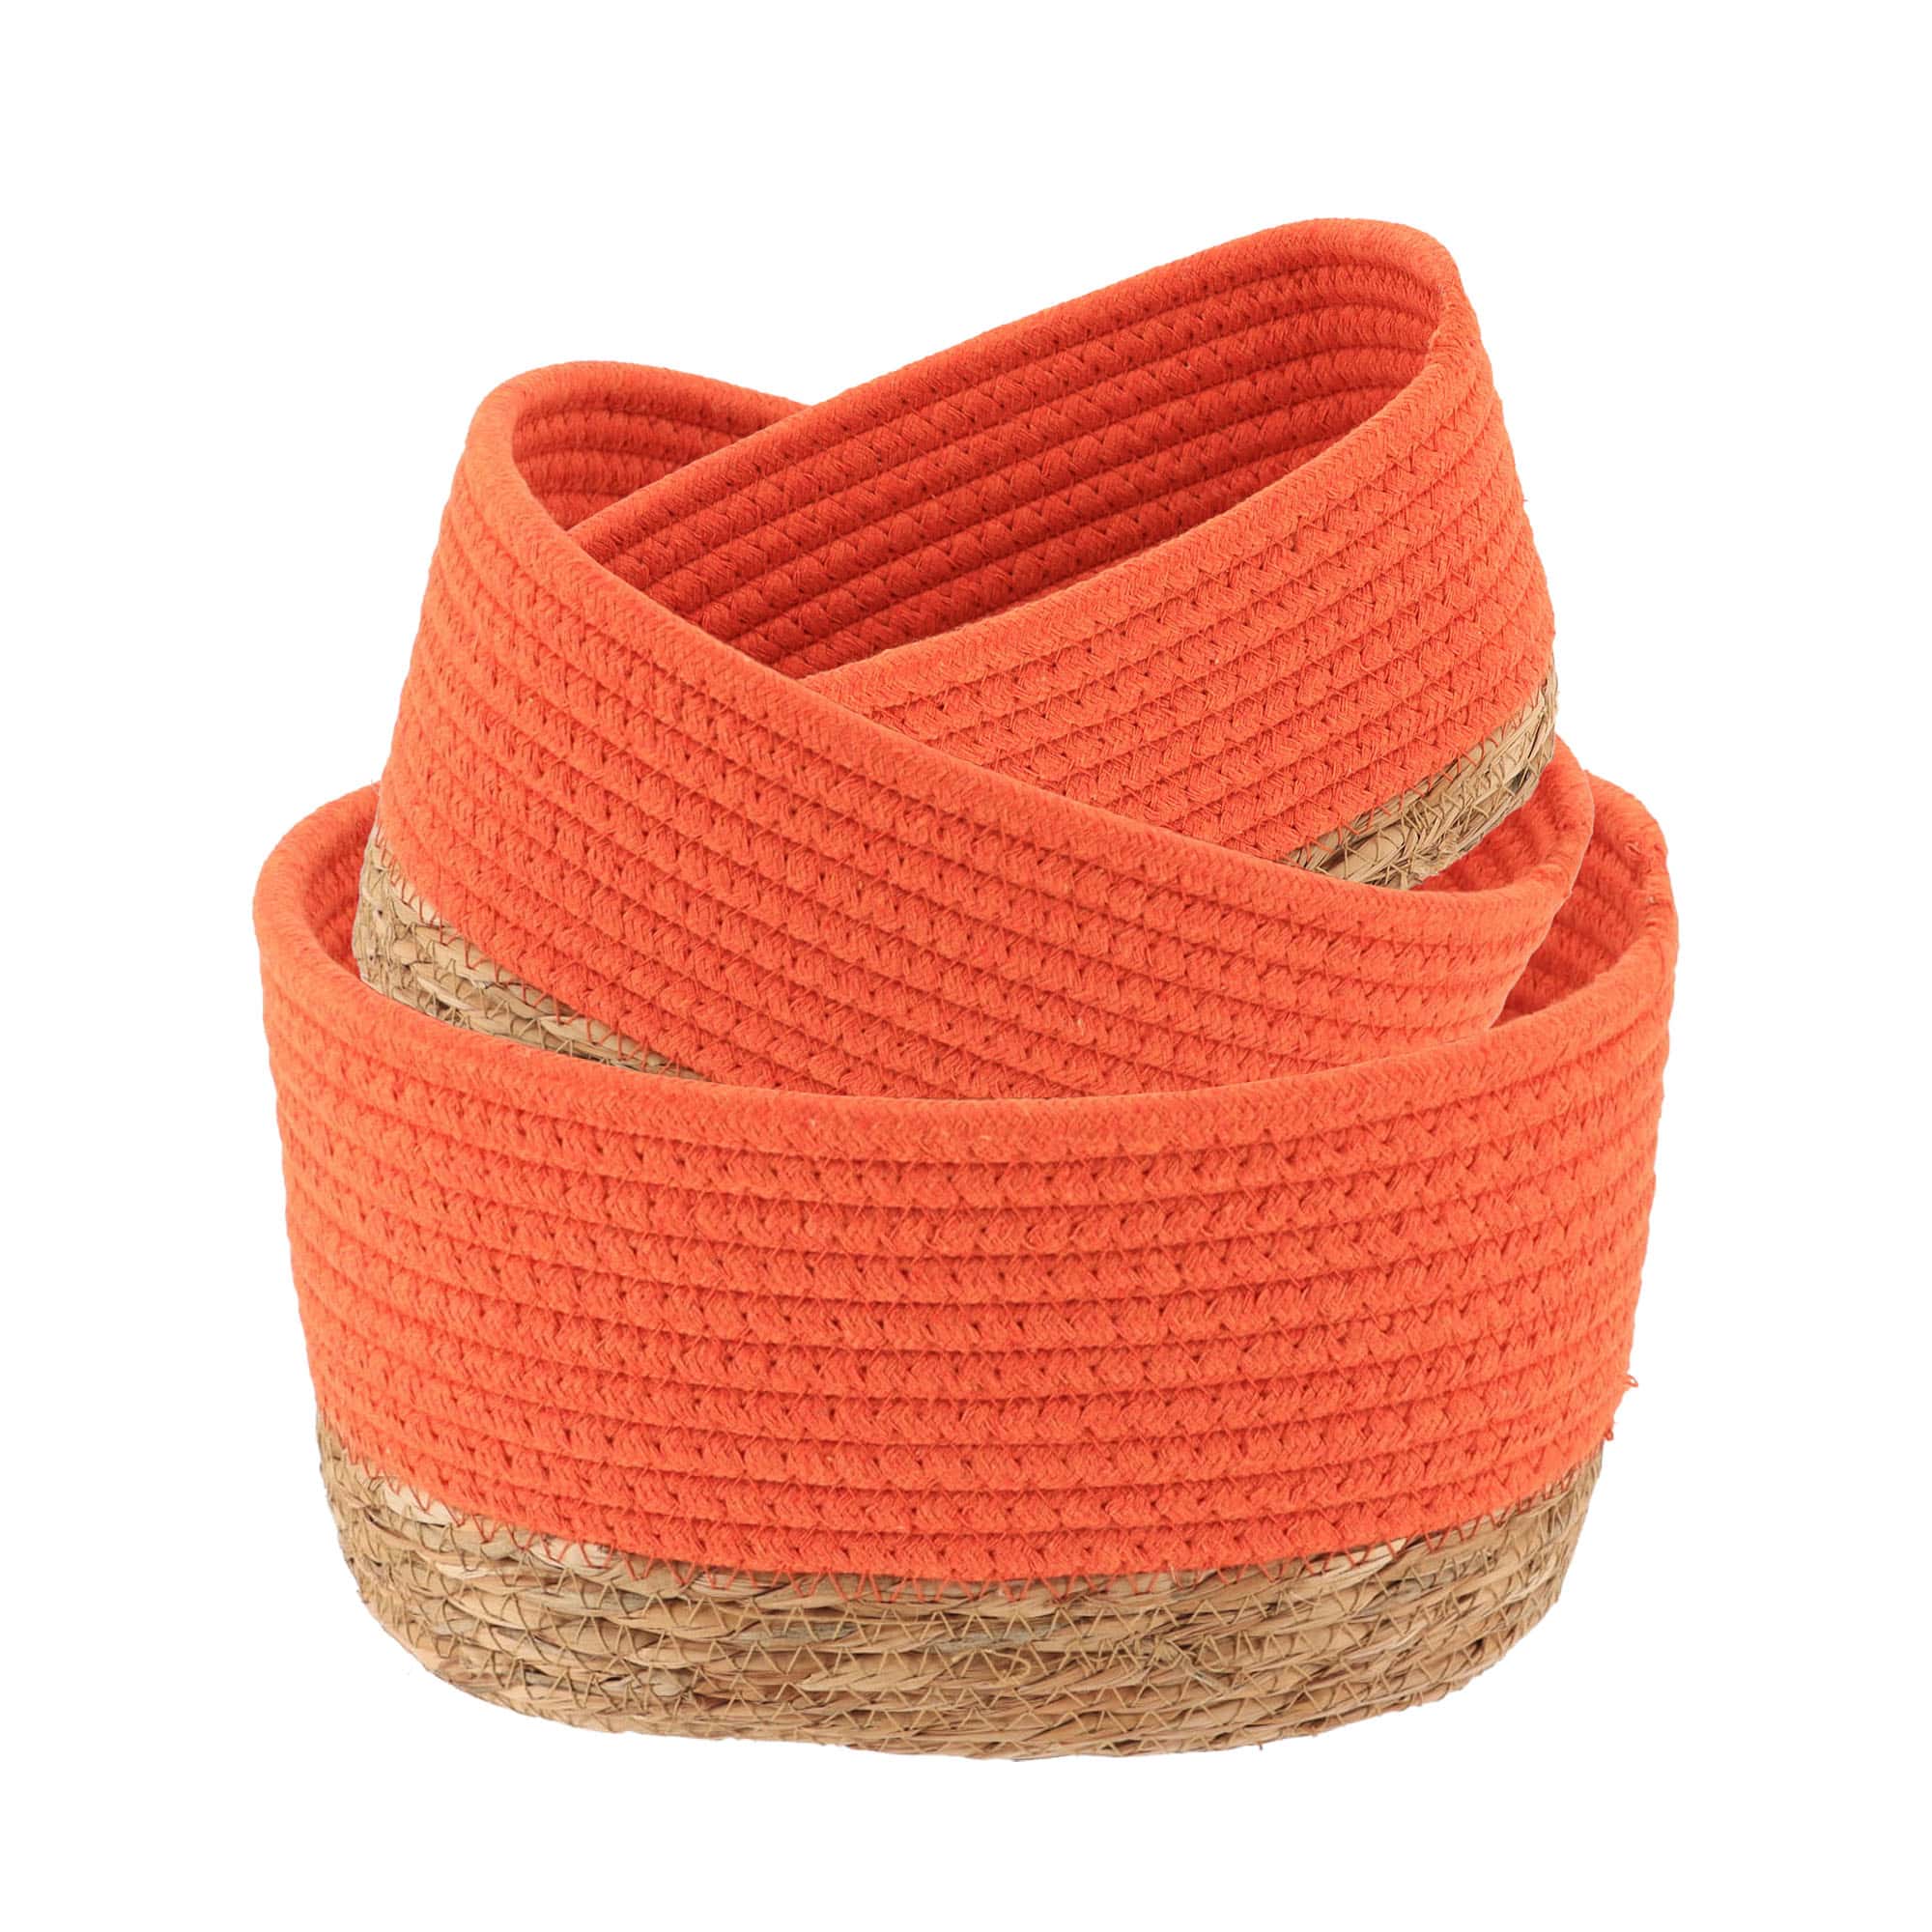 orange cotton and natural seagrass set of 3 storage baskets